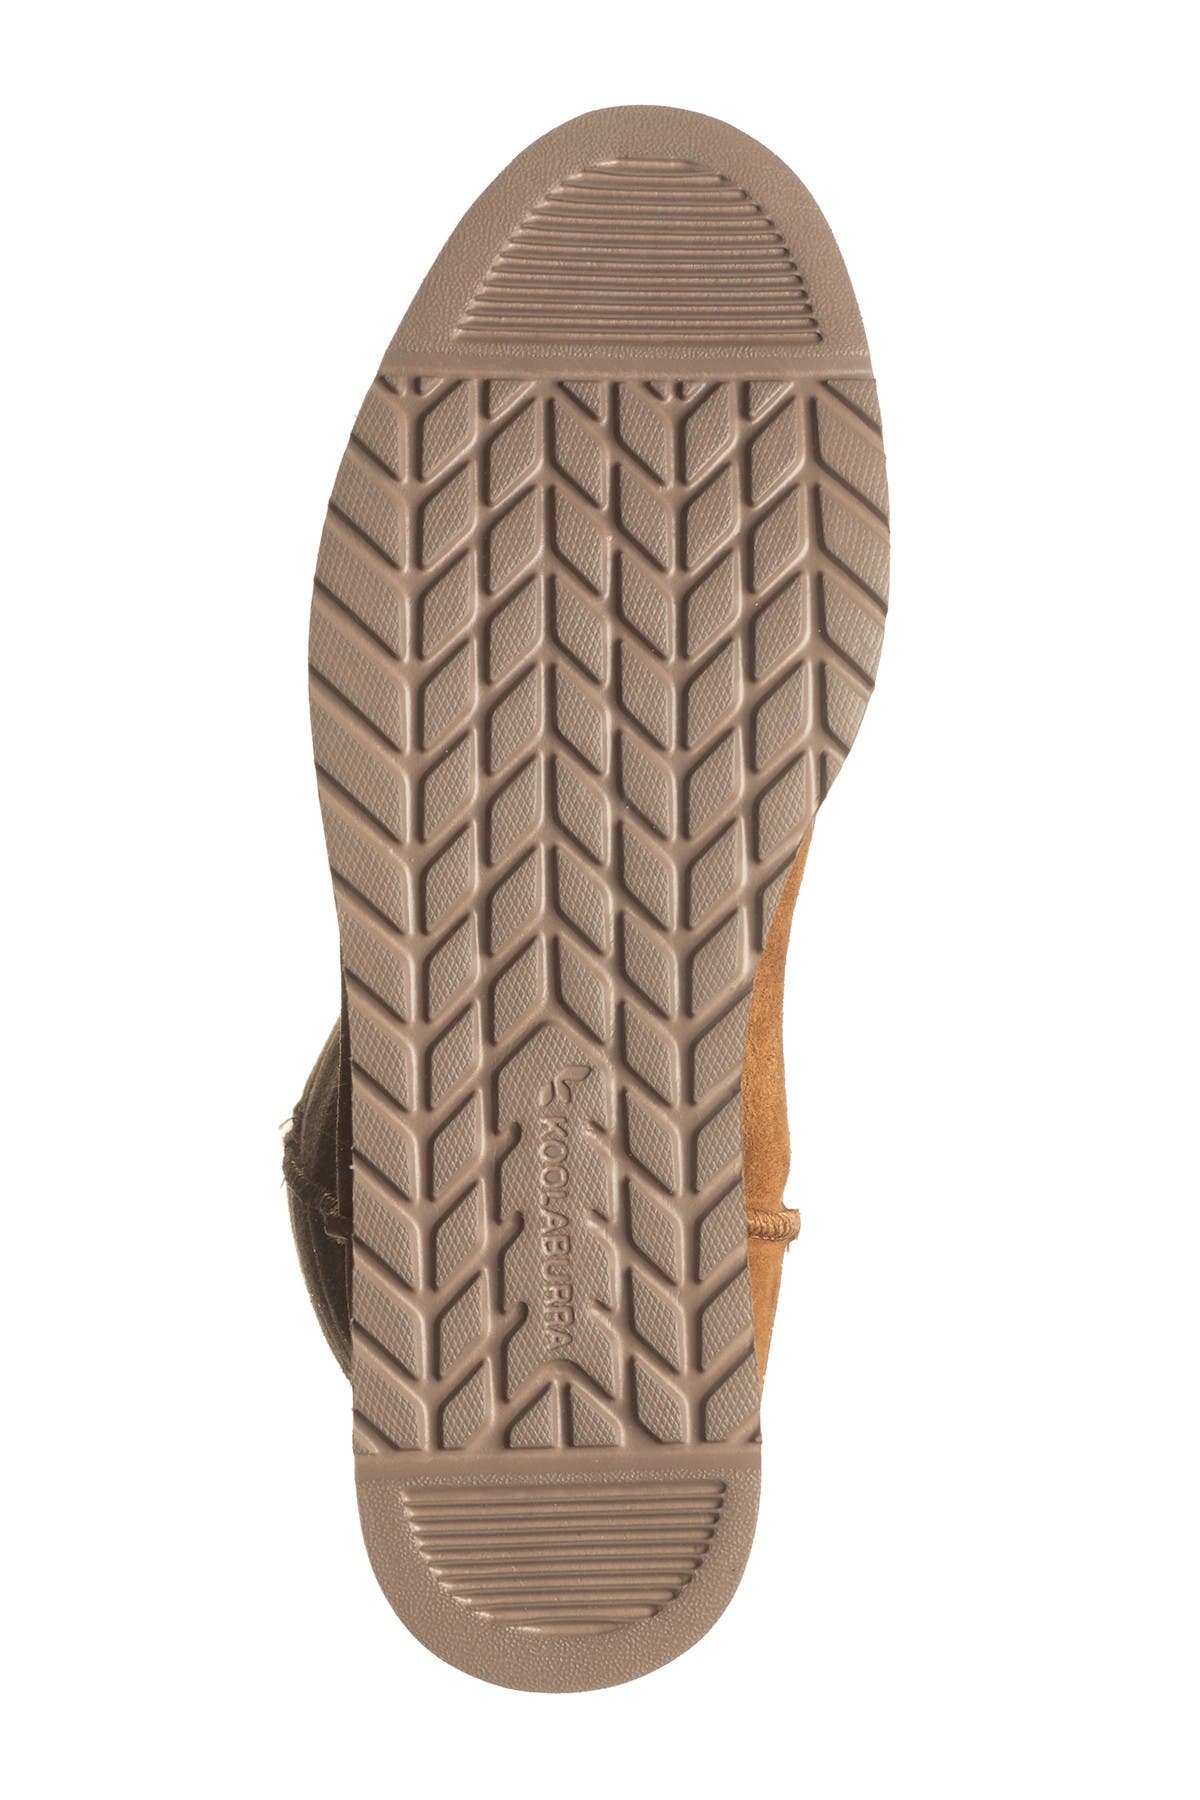 koolaburra by ugg classic slim tall genuine shearling lined boot